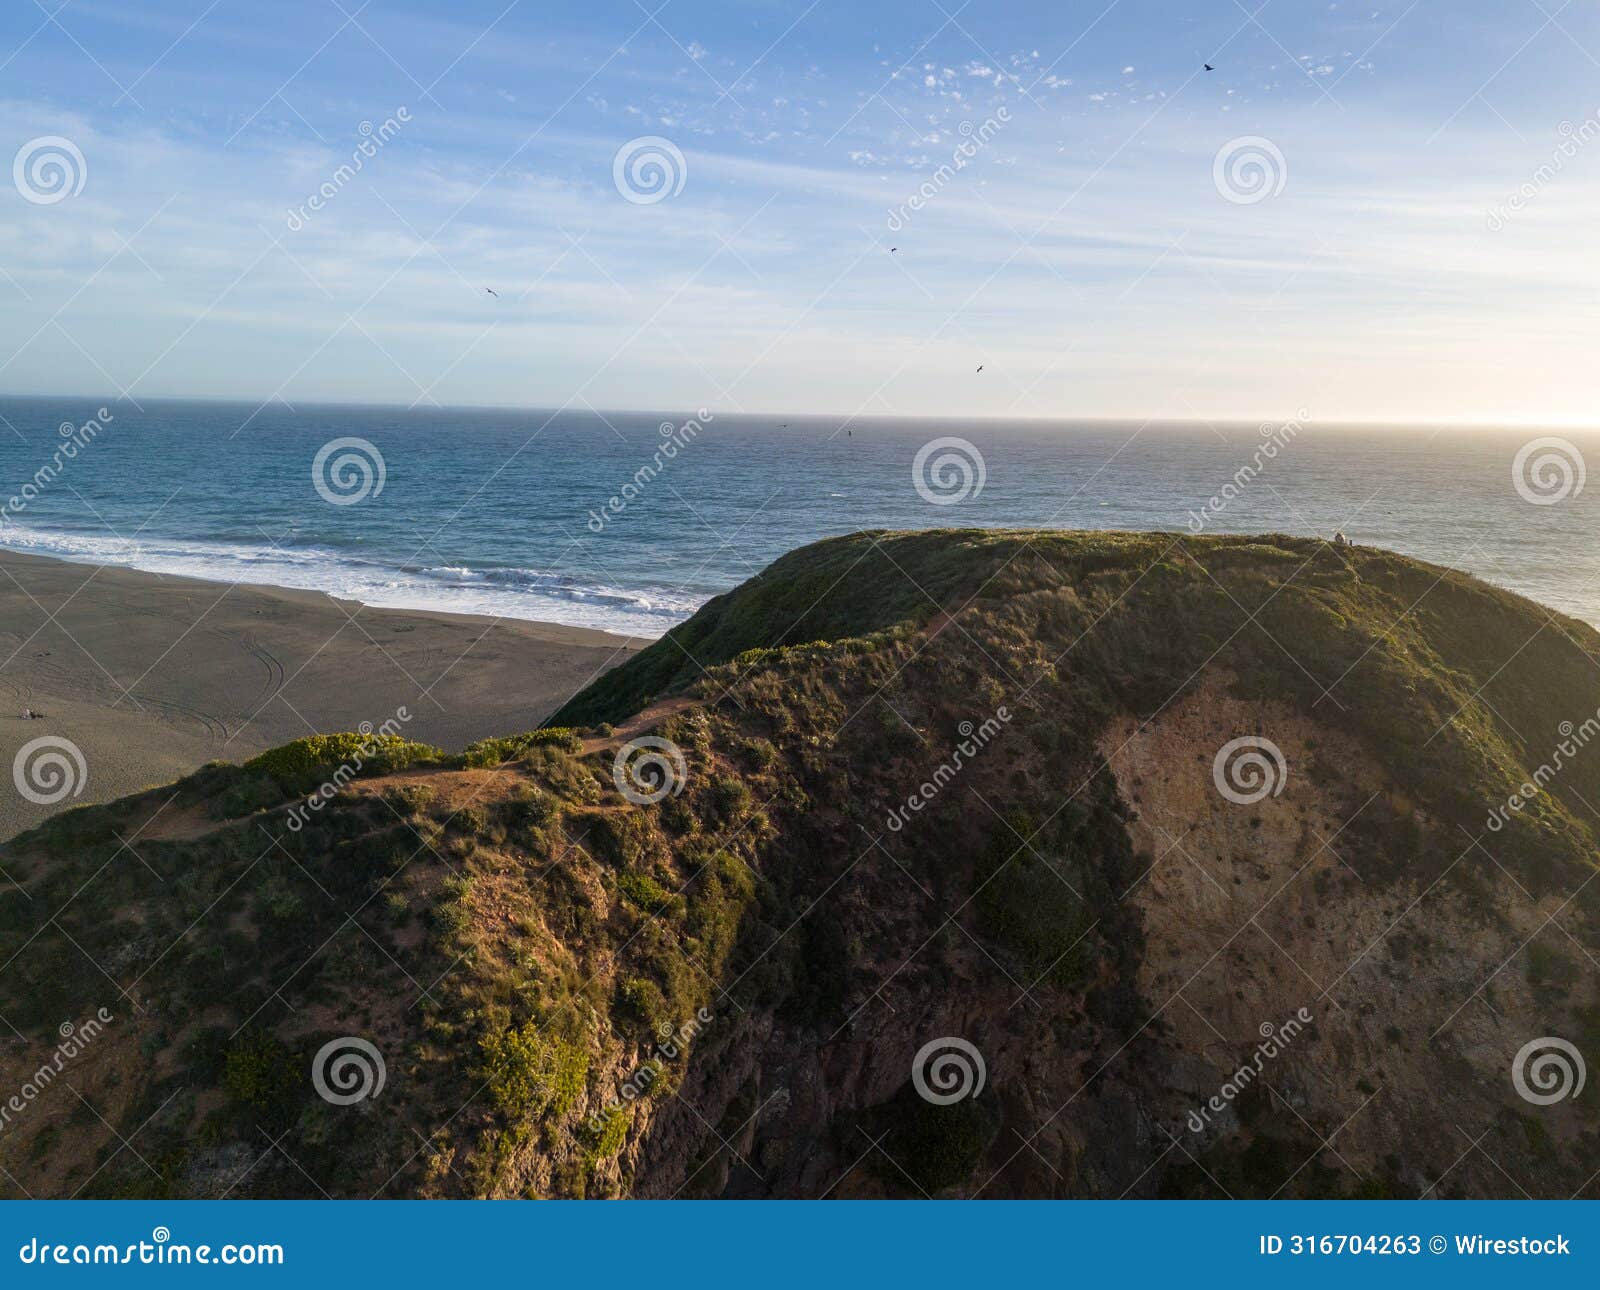 scenic view of the beautiful landscape of cobquecura, nuble region, chile